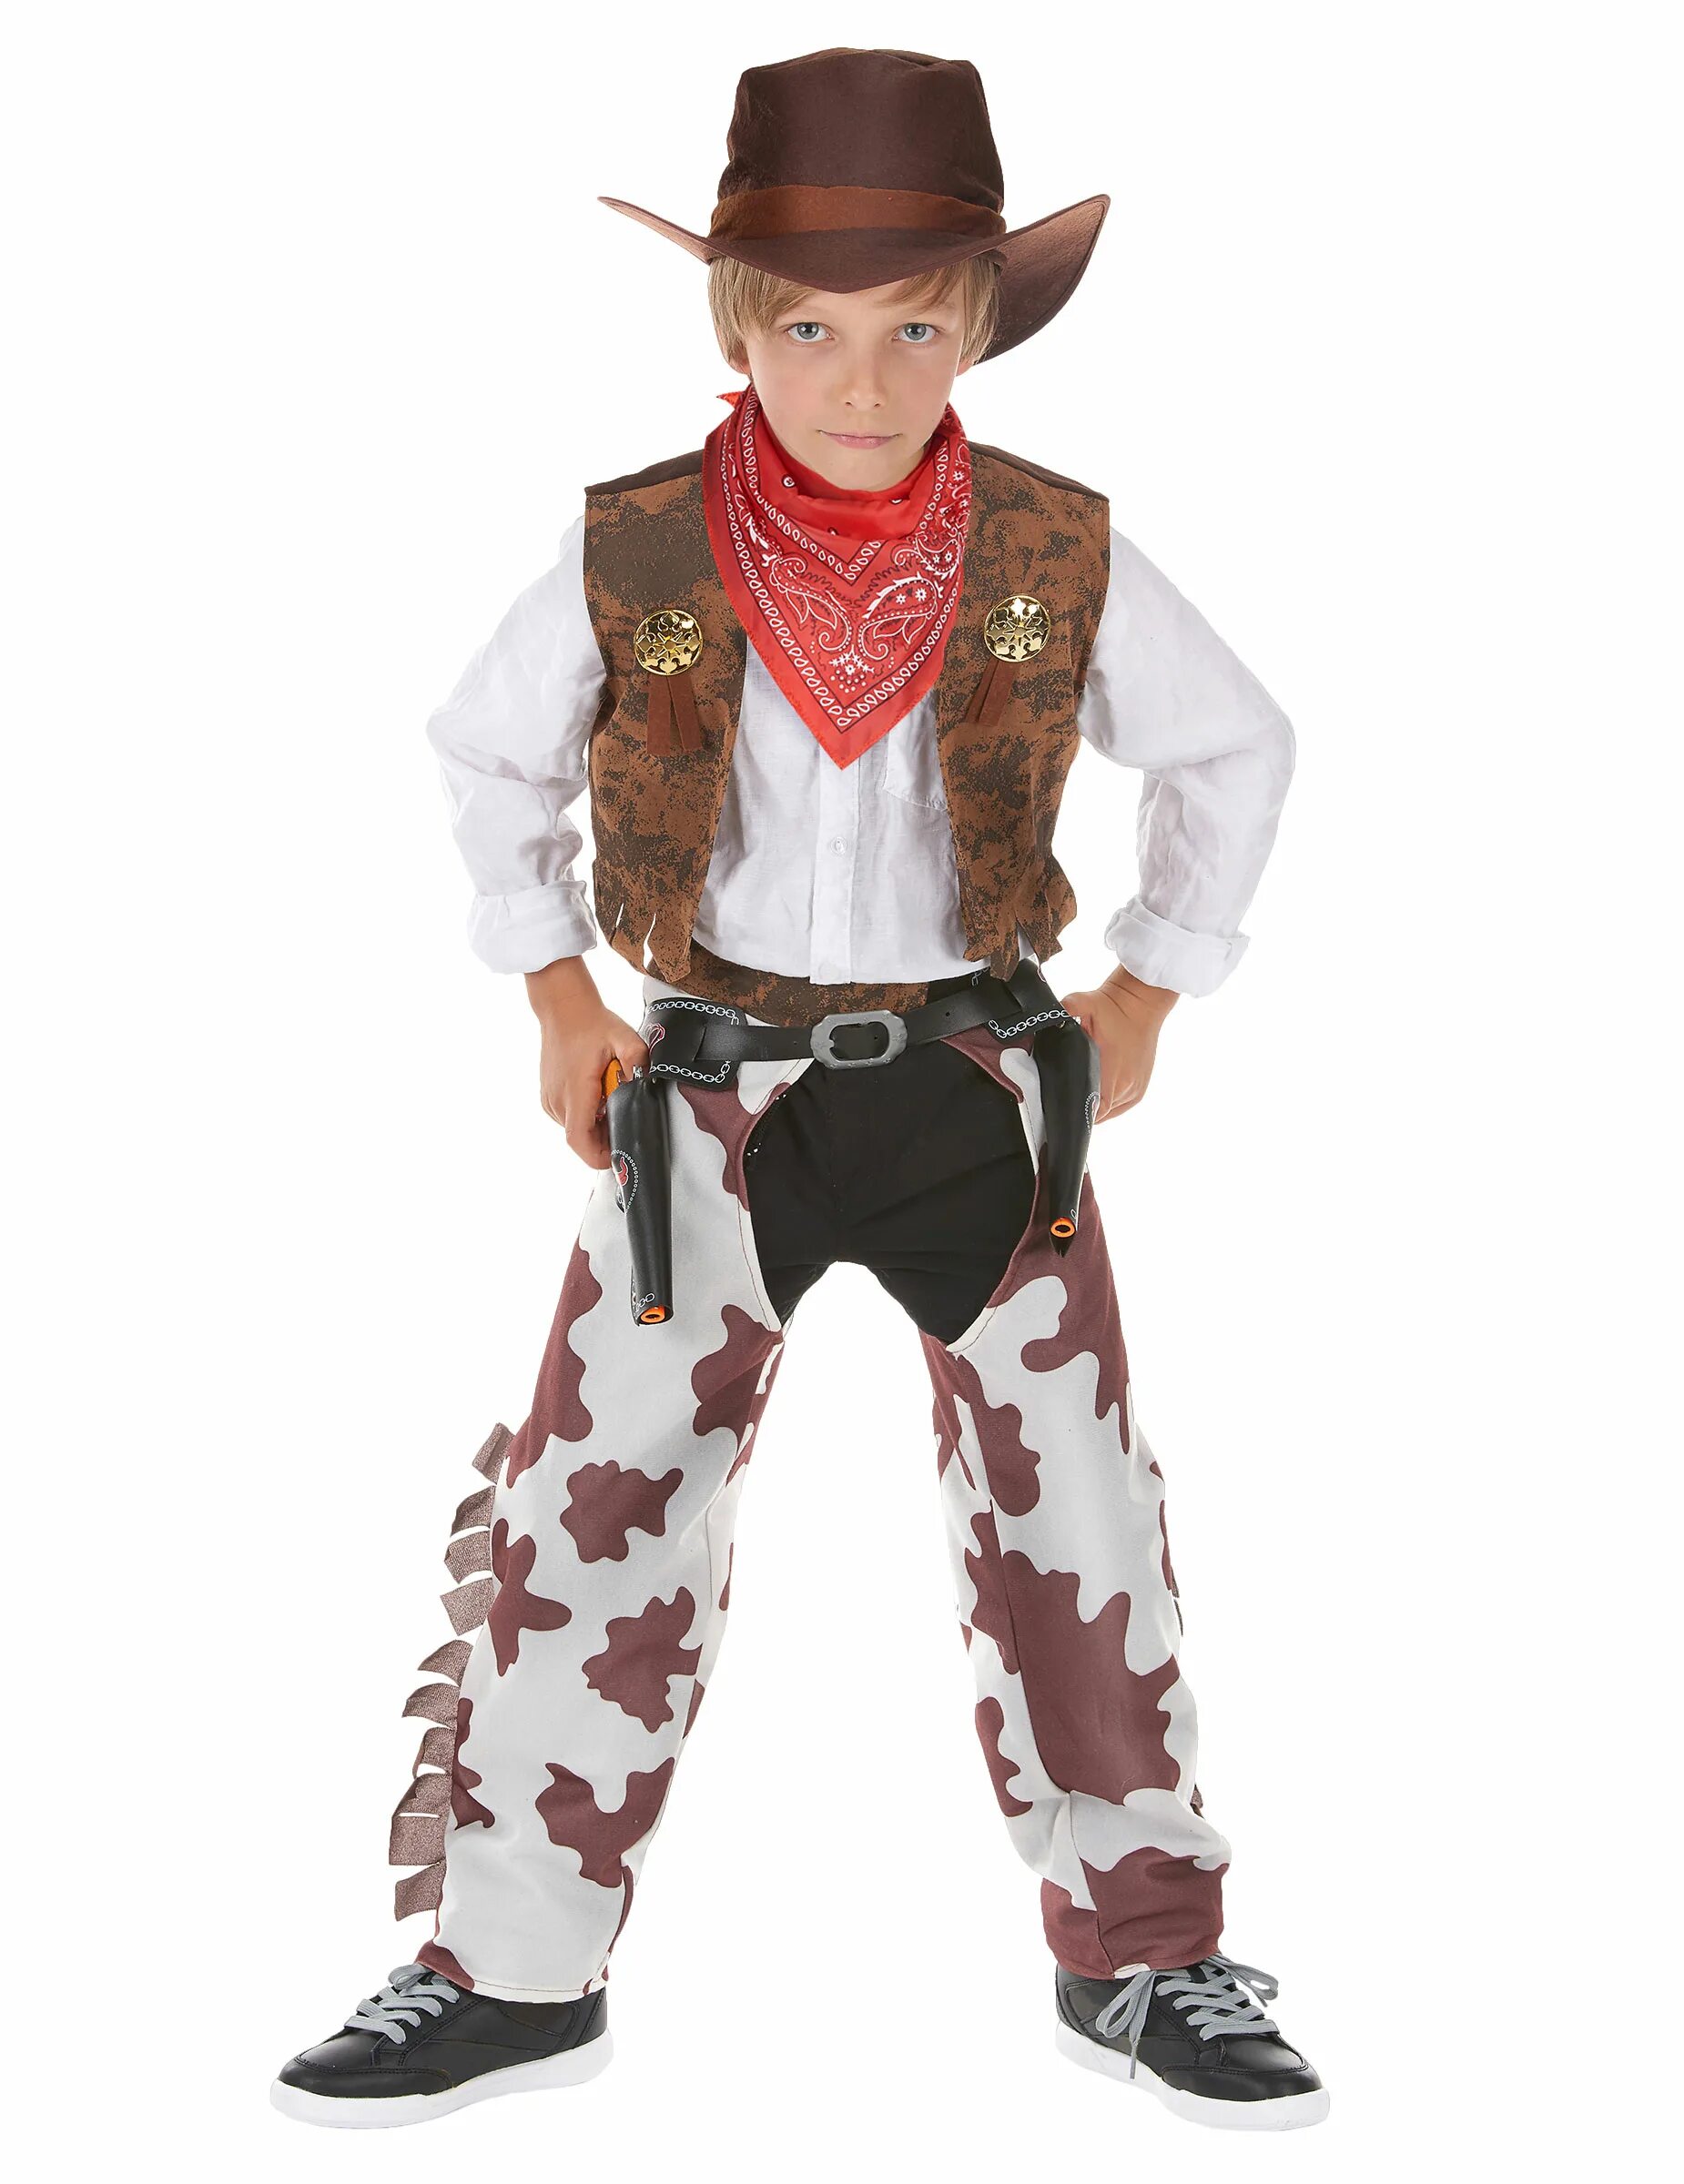 Костюм ковбоя. Костюм "ковбой". Детский ковбойский костюм. Ковбойская одежда для мальчиков. Детский костюм "ковбой".